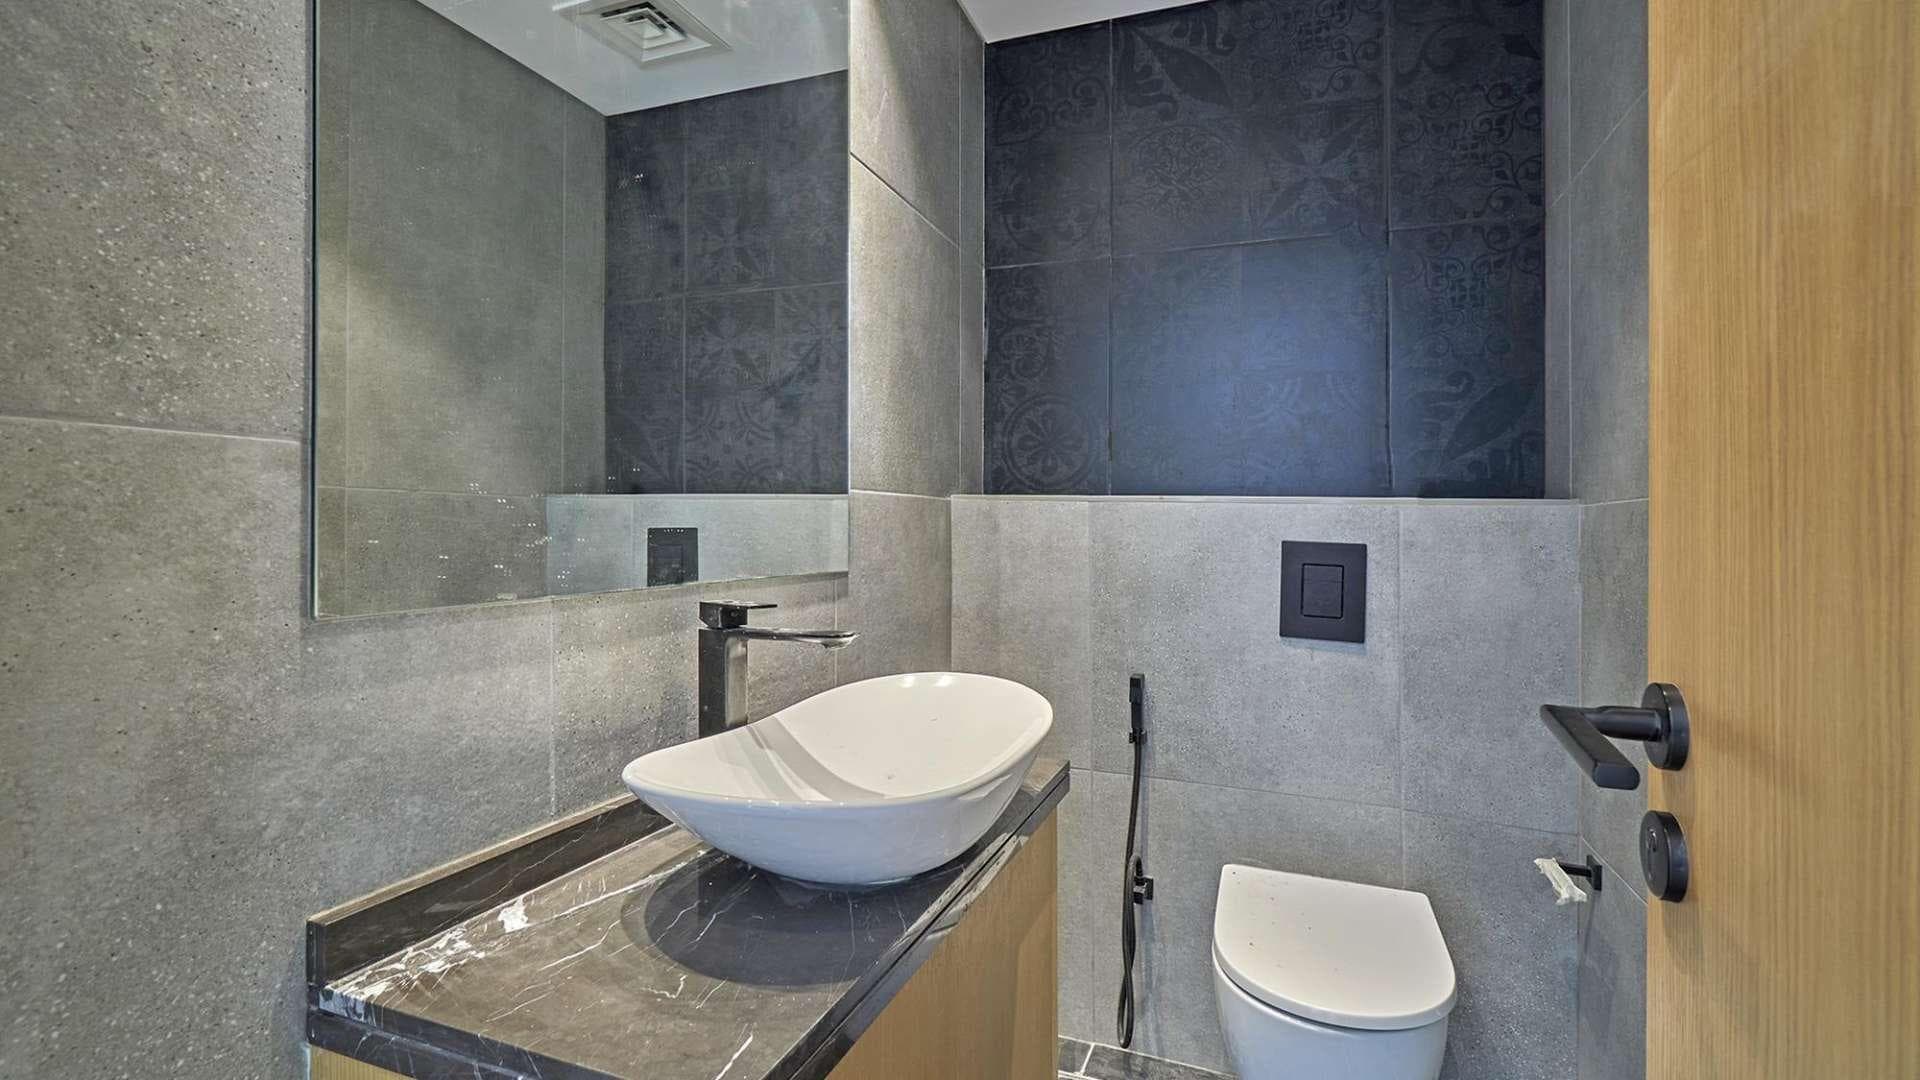 4 Bedroom Villa For Rent Jumeirah Luxury Lp16471 1a1407399f5d1400.jpg